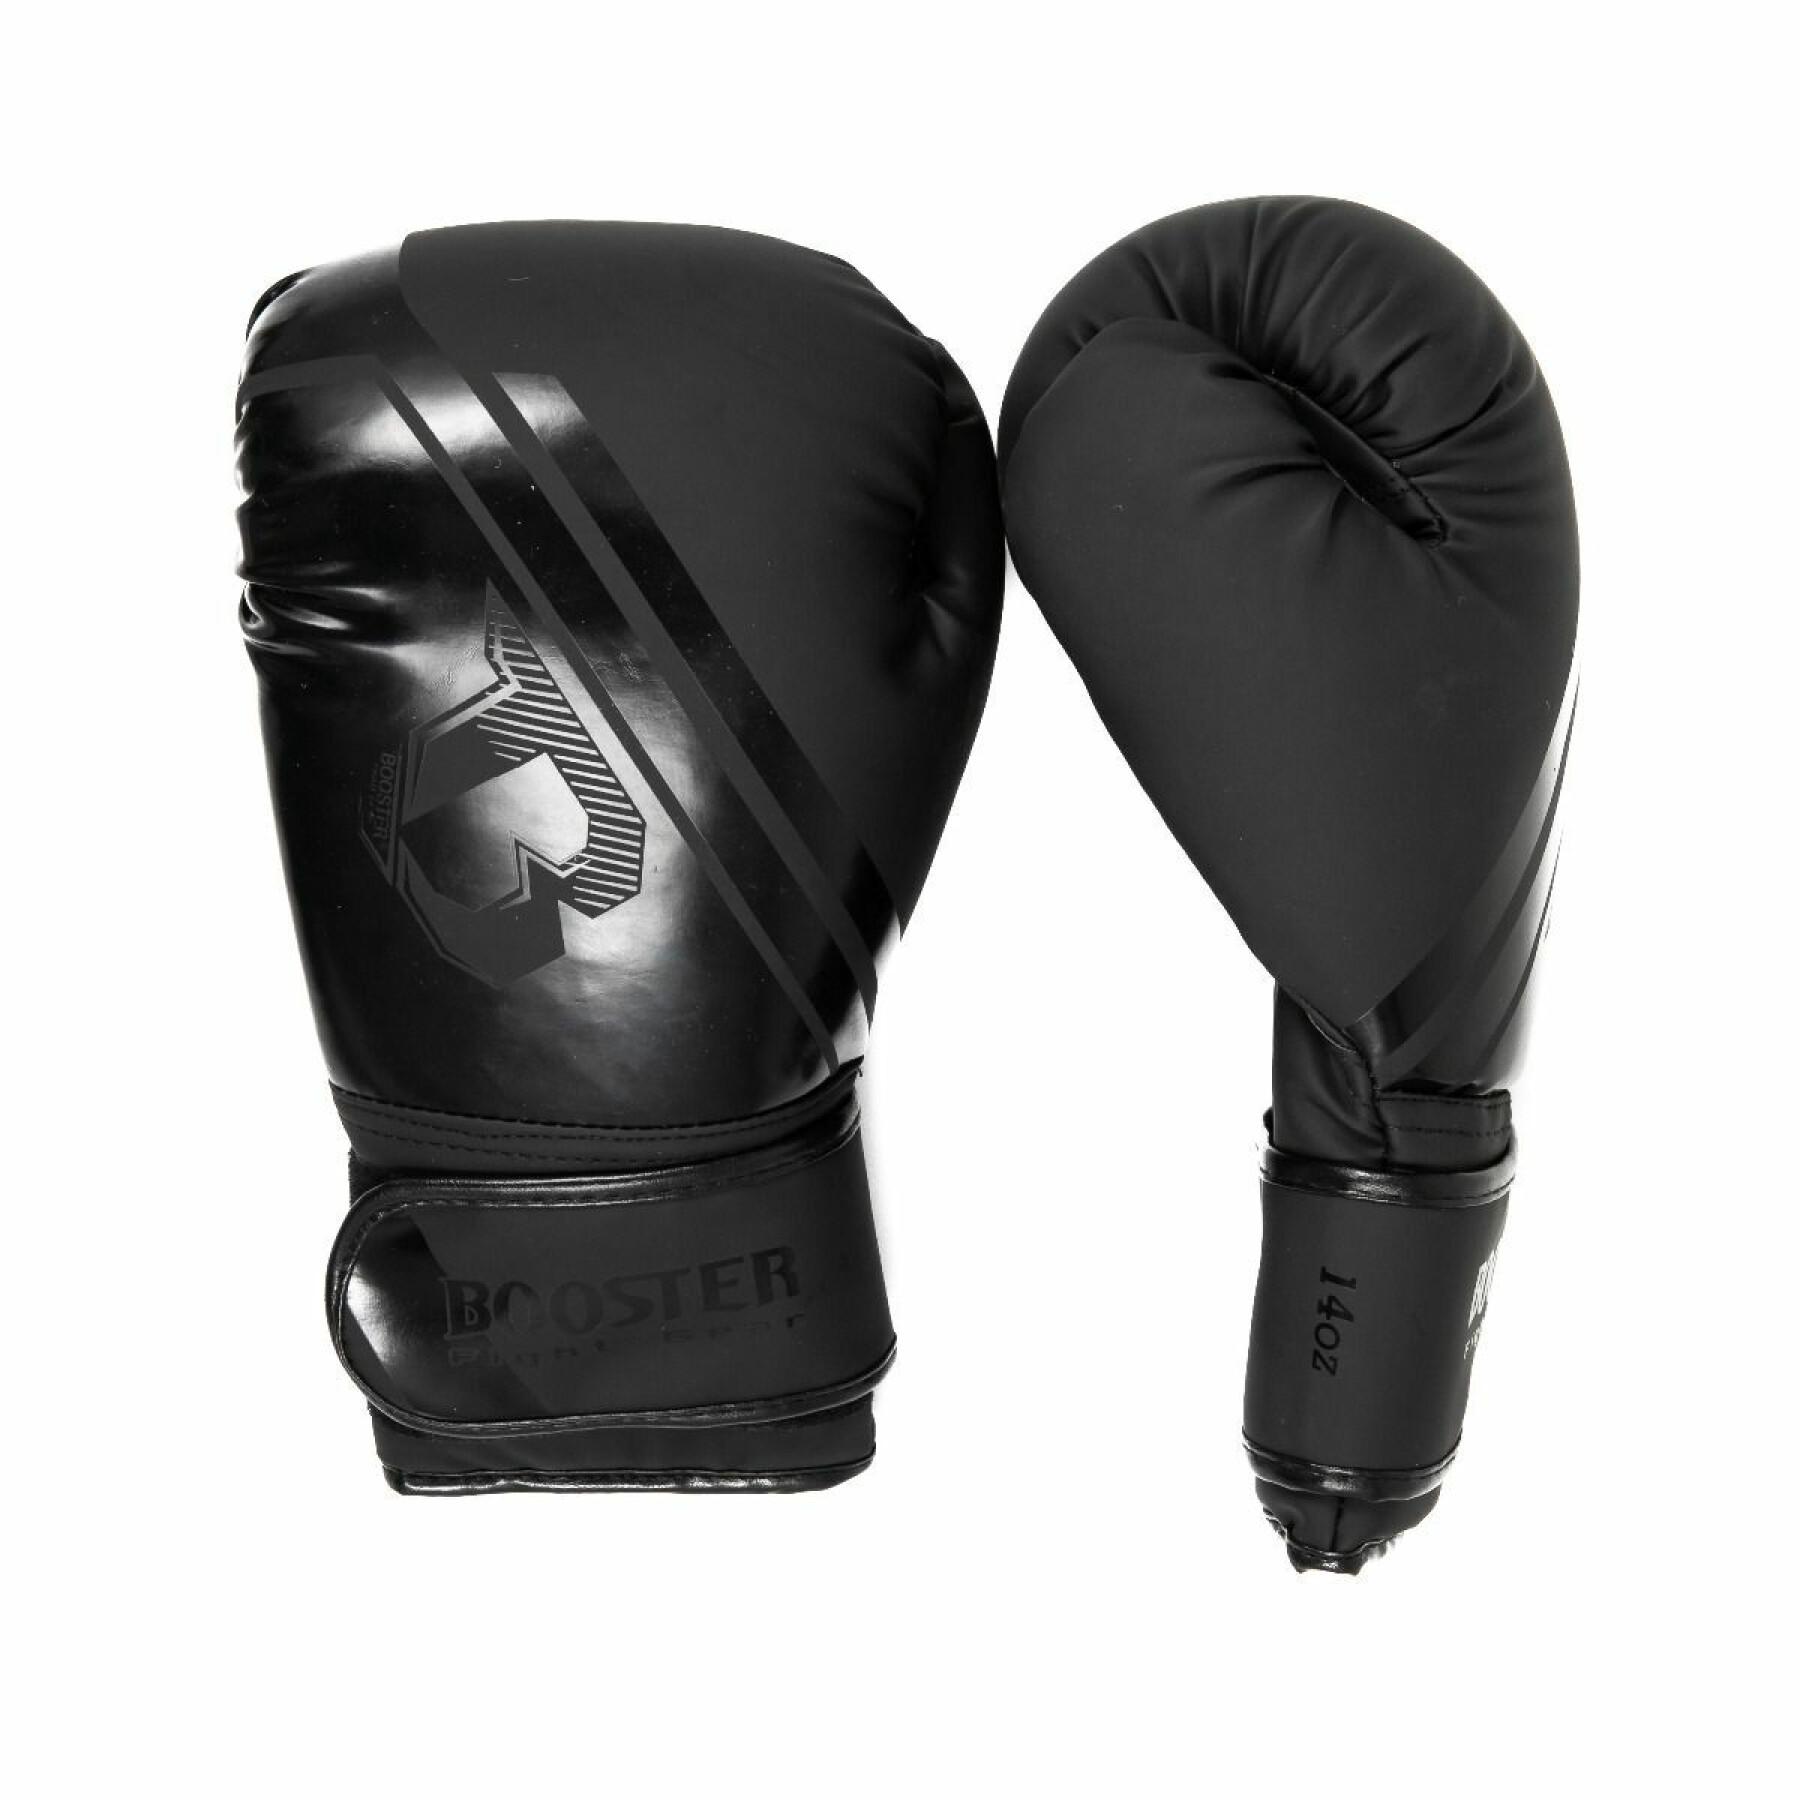 Luvas de boxe Booster Fight Gear Bt Sparring V2